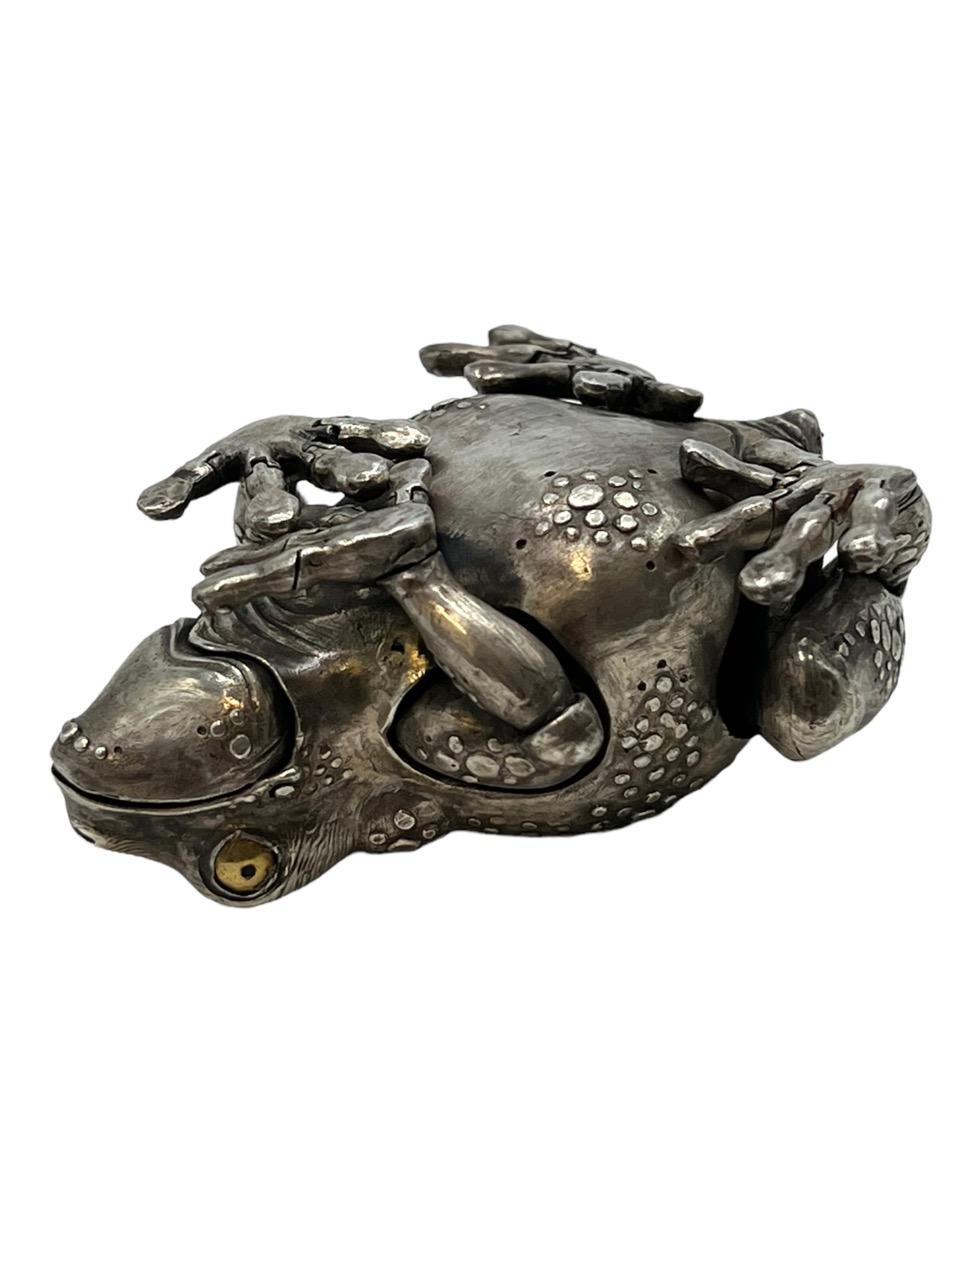 Oleg Konstantinov Fully Articulated Frog Made of Sterling Silver For Sale 11